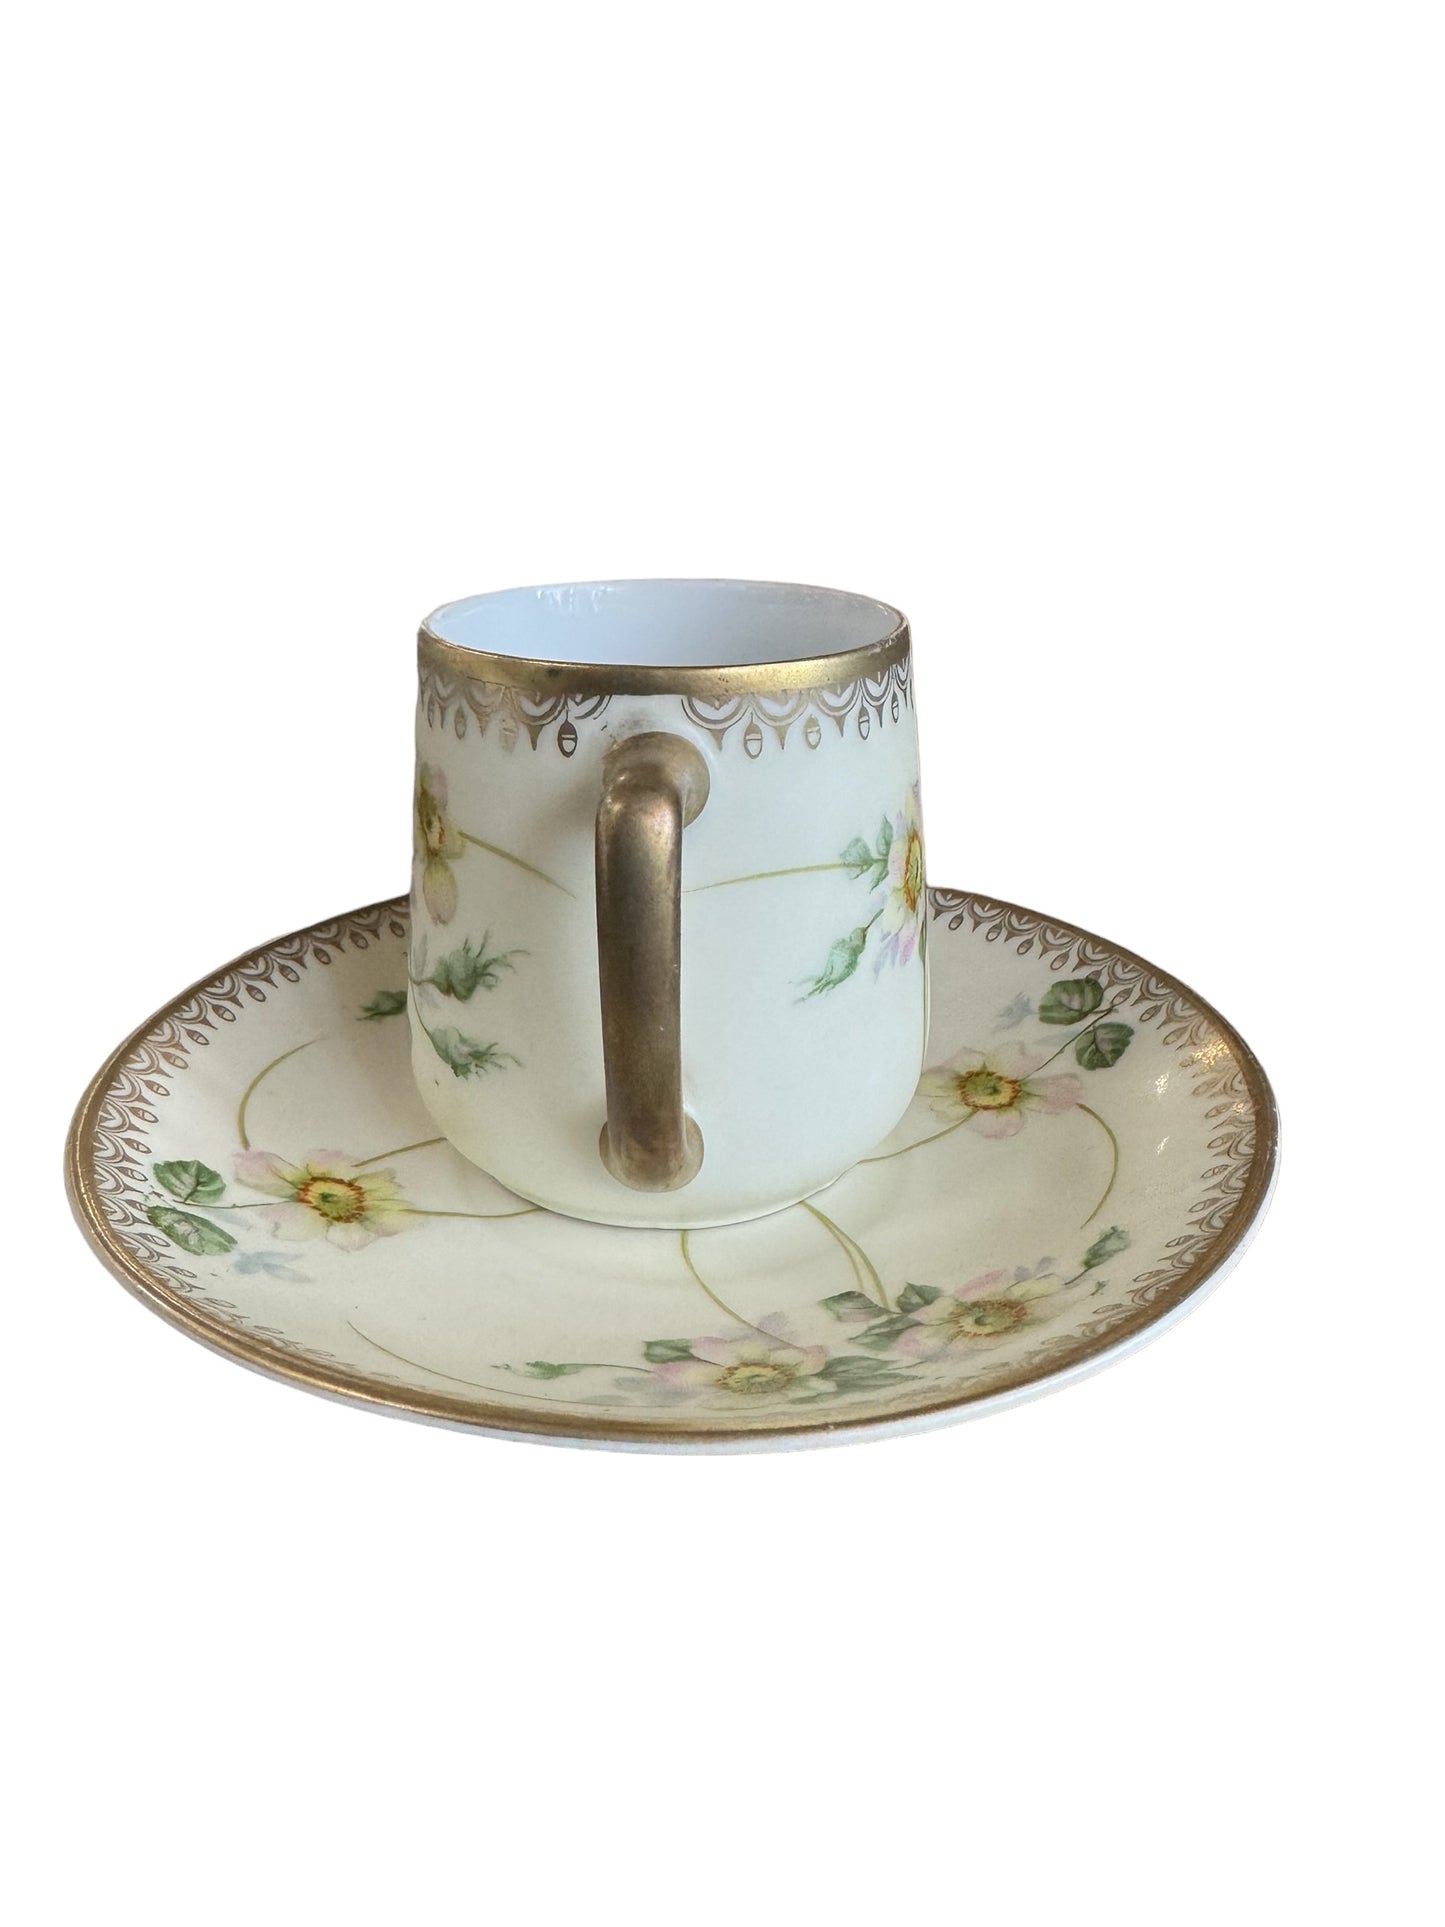 Antique Porcelain Bavaria Tea Cup and Saucer Dogwoods